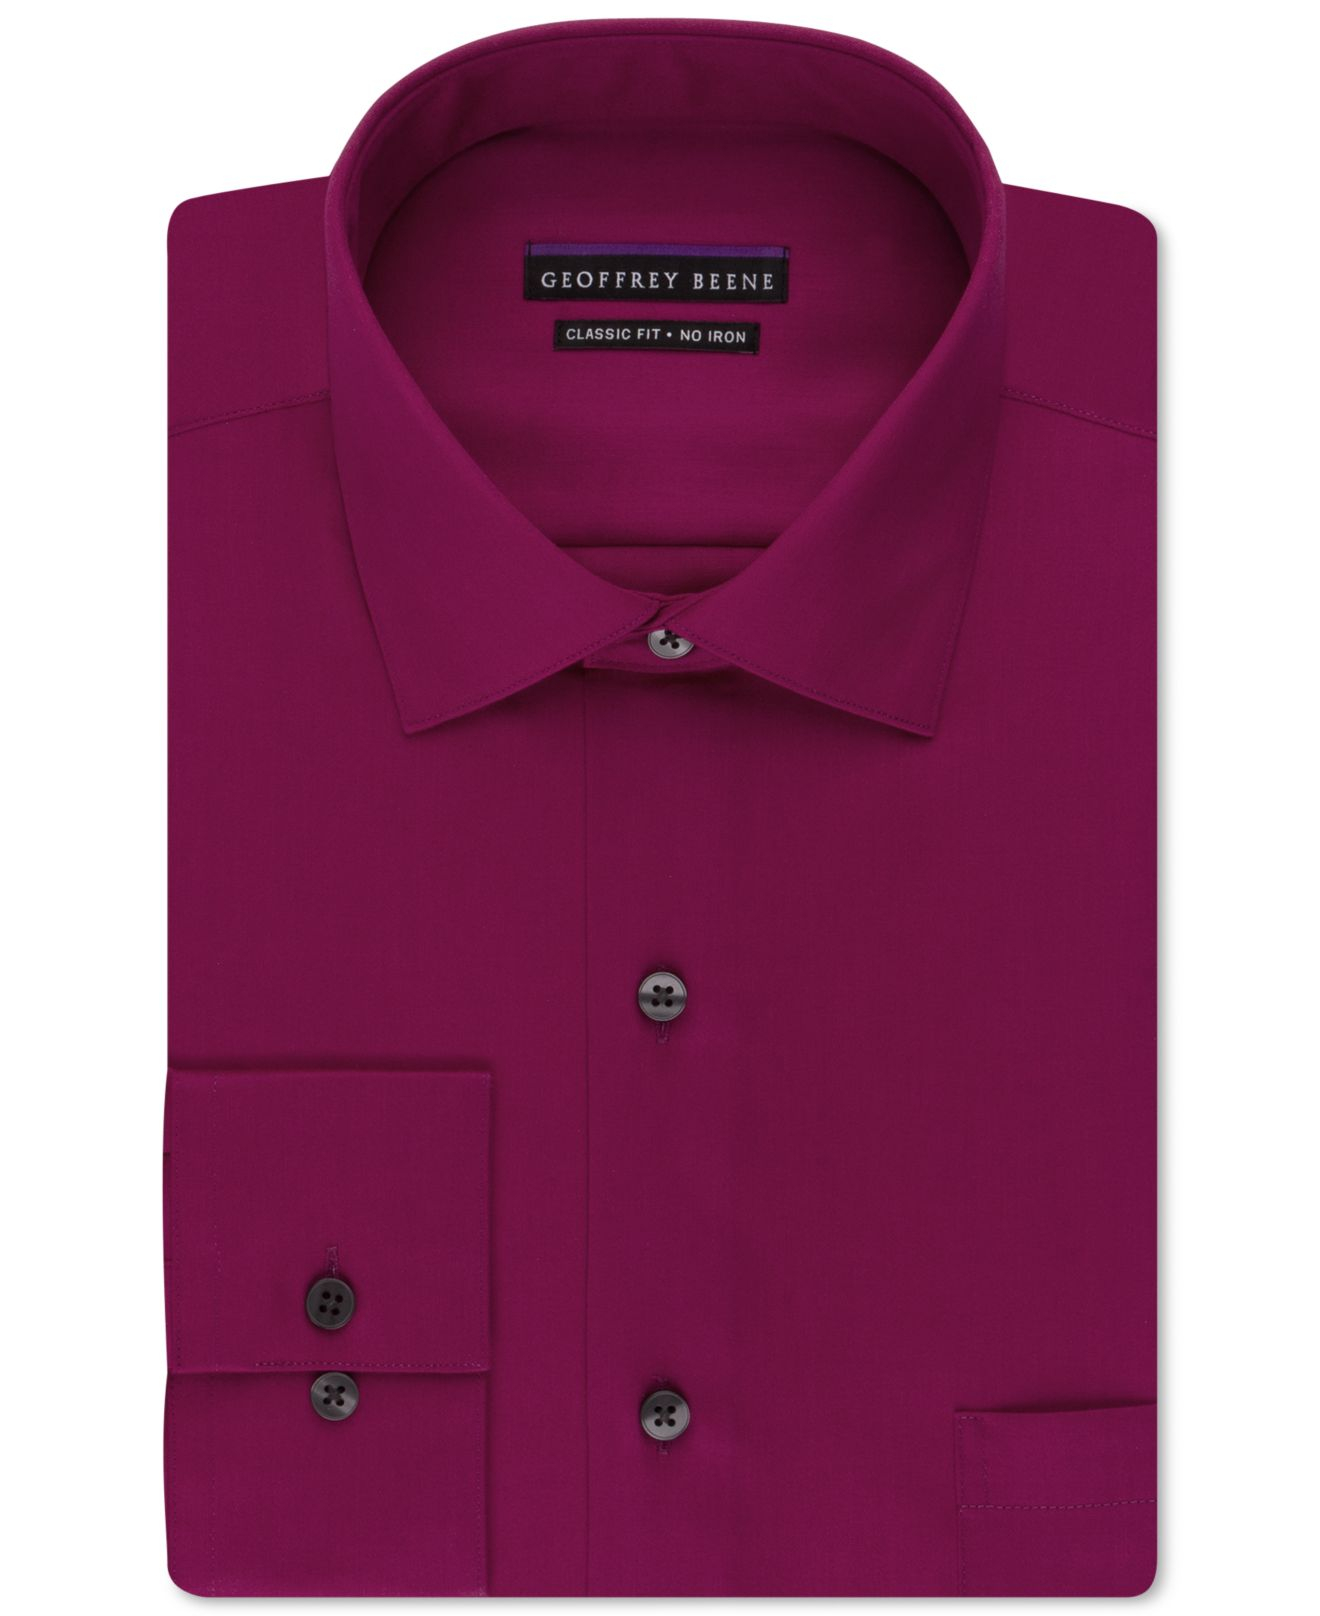 Lyst - Geoffrey Beene Non-iron Sateen Solid Dress Shirt in Purple for Men